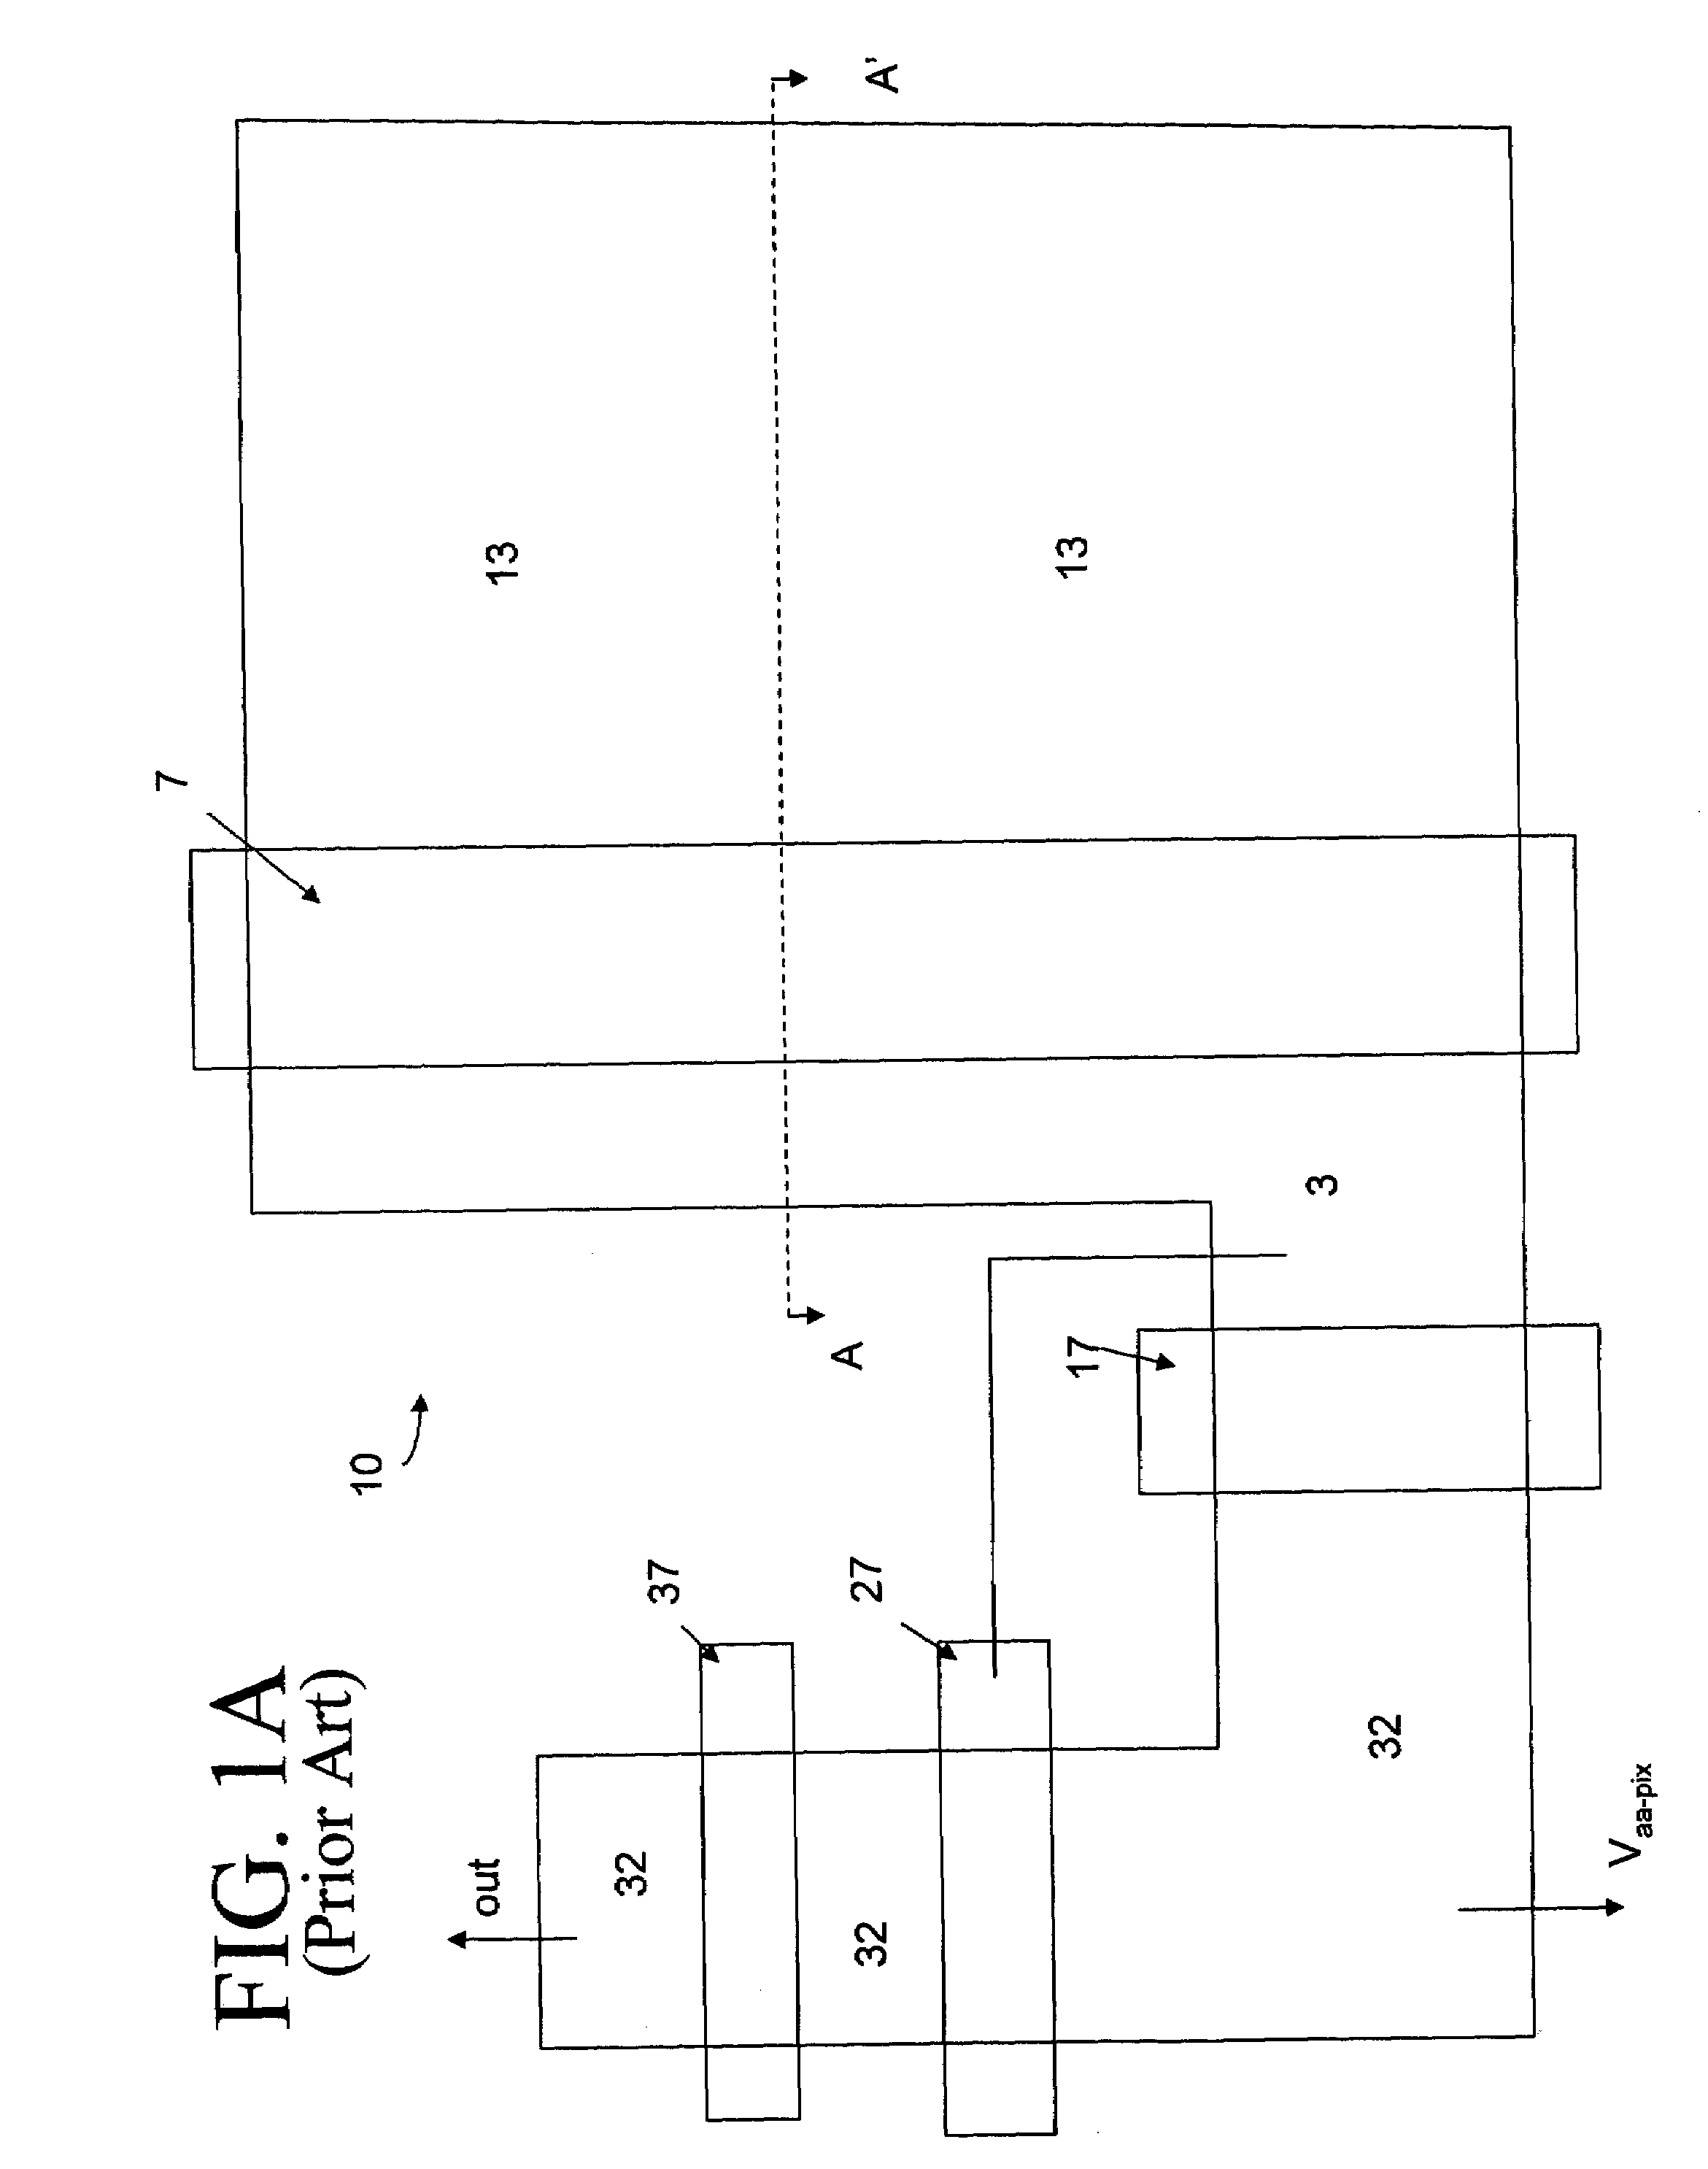 Method of fabricating a storage gate pixel design